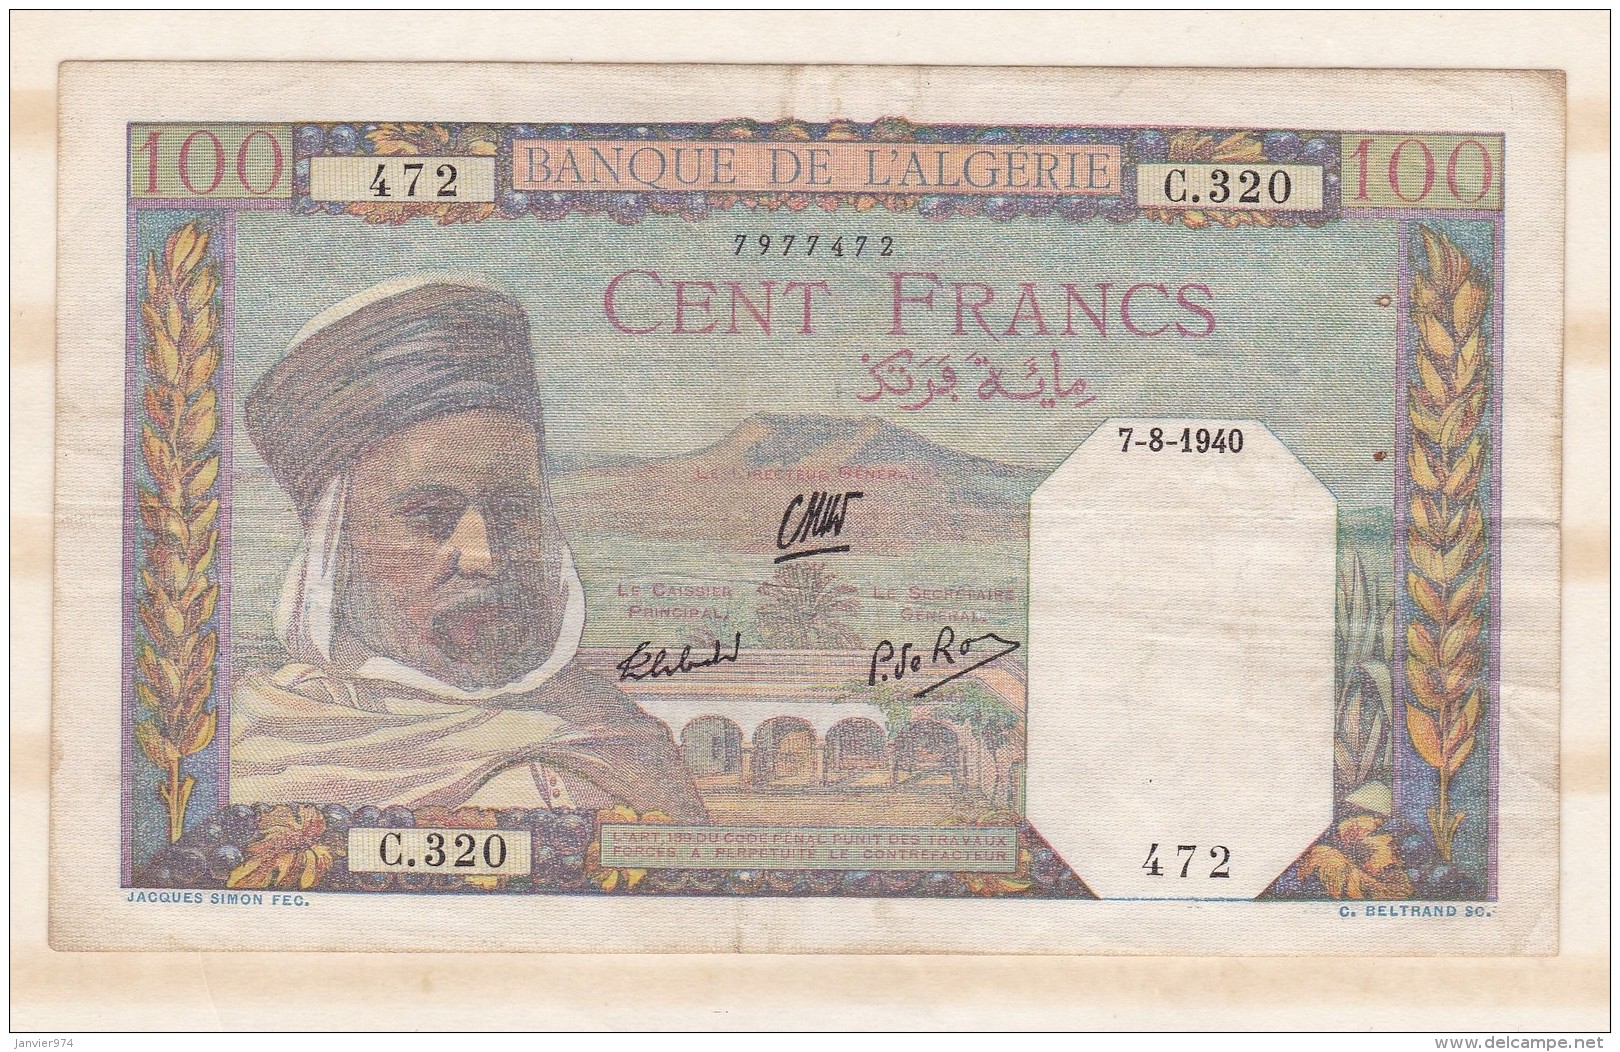 Billet . 100 FRANCS 27 - 8  - 1940, Alphabet C.320  N° 472 - Algeria